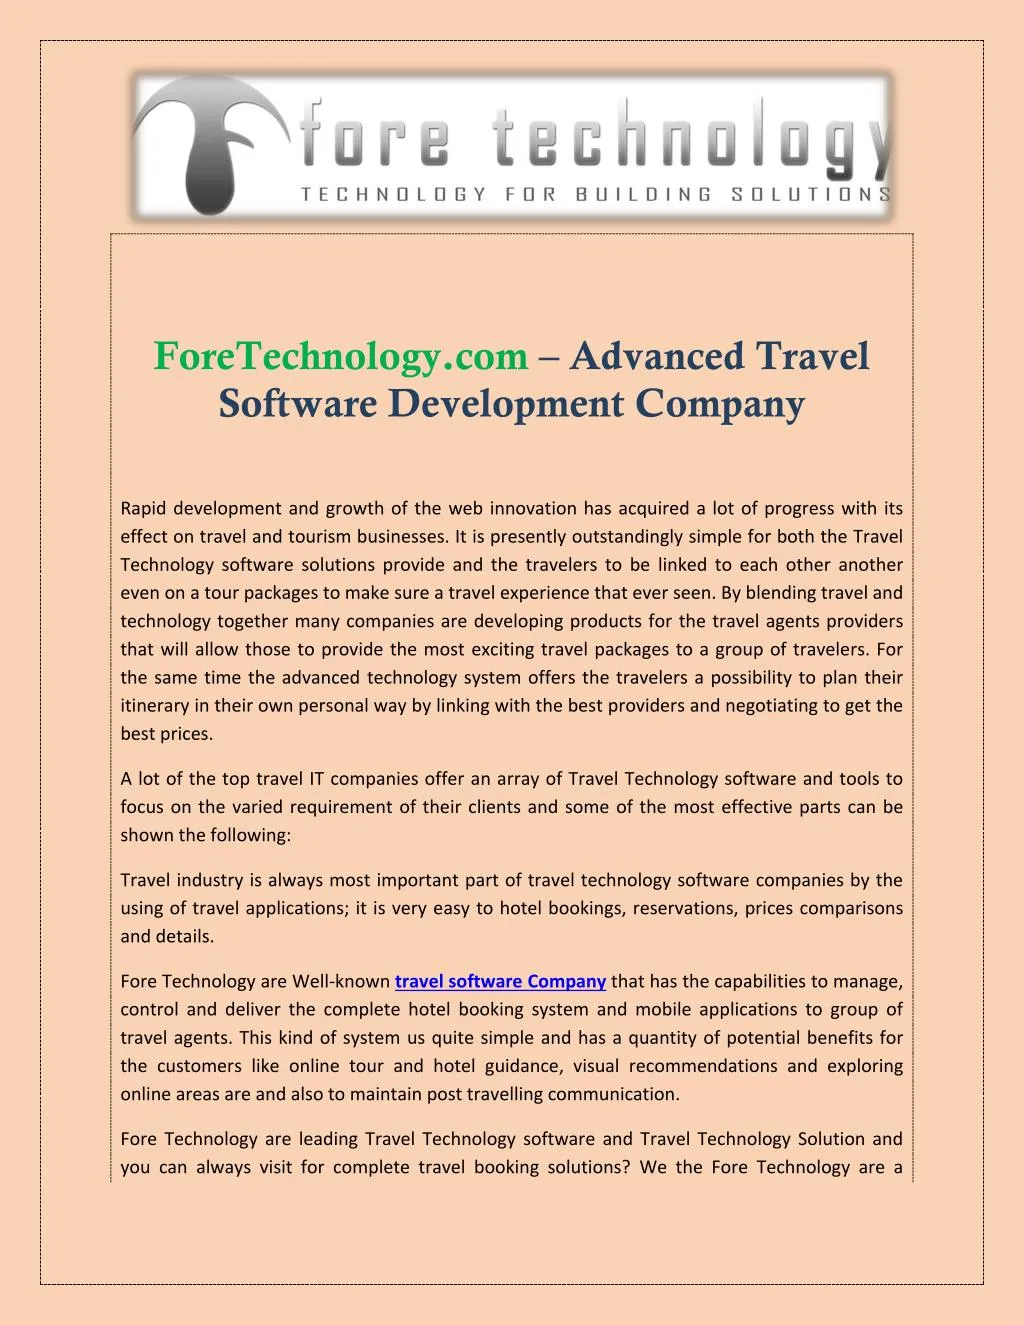 foretechnology com advanced travel software